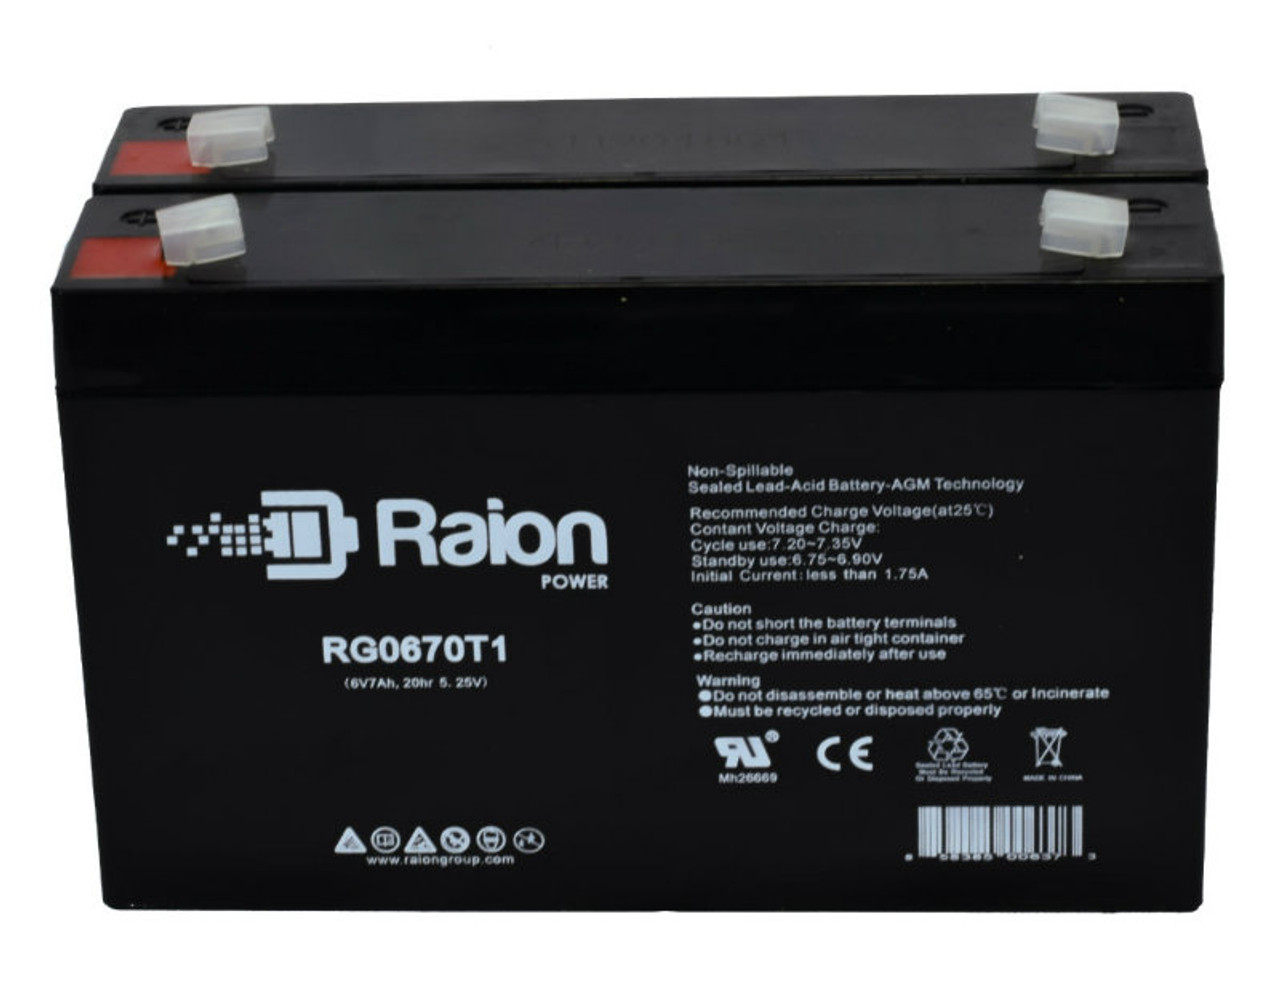 Raion Power RG0670T1 6V 7Ah Replacement Emergency Light Battery for Light Alarms 2FL1 - 2 Pack